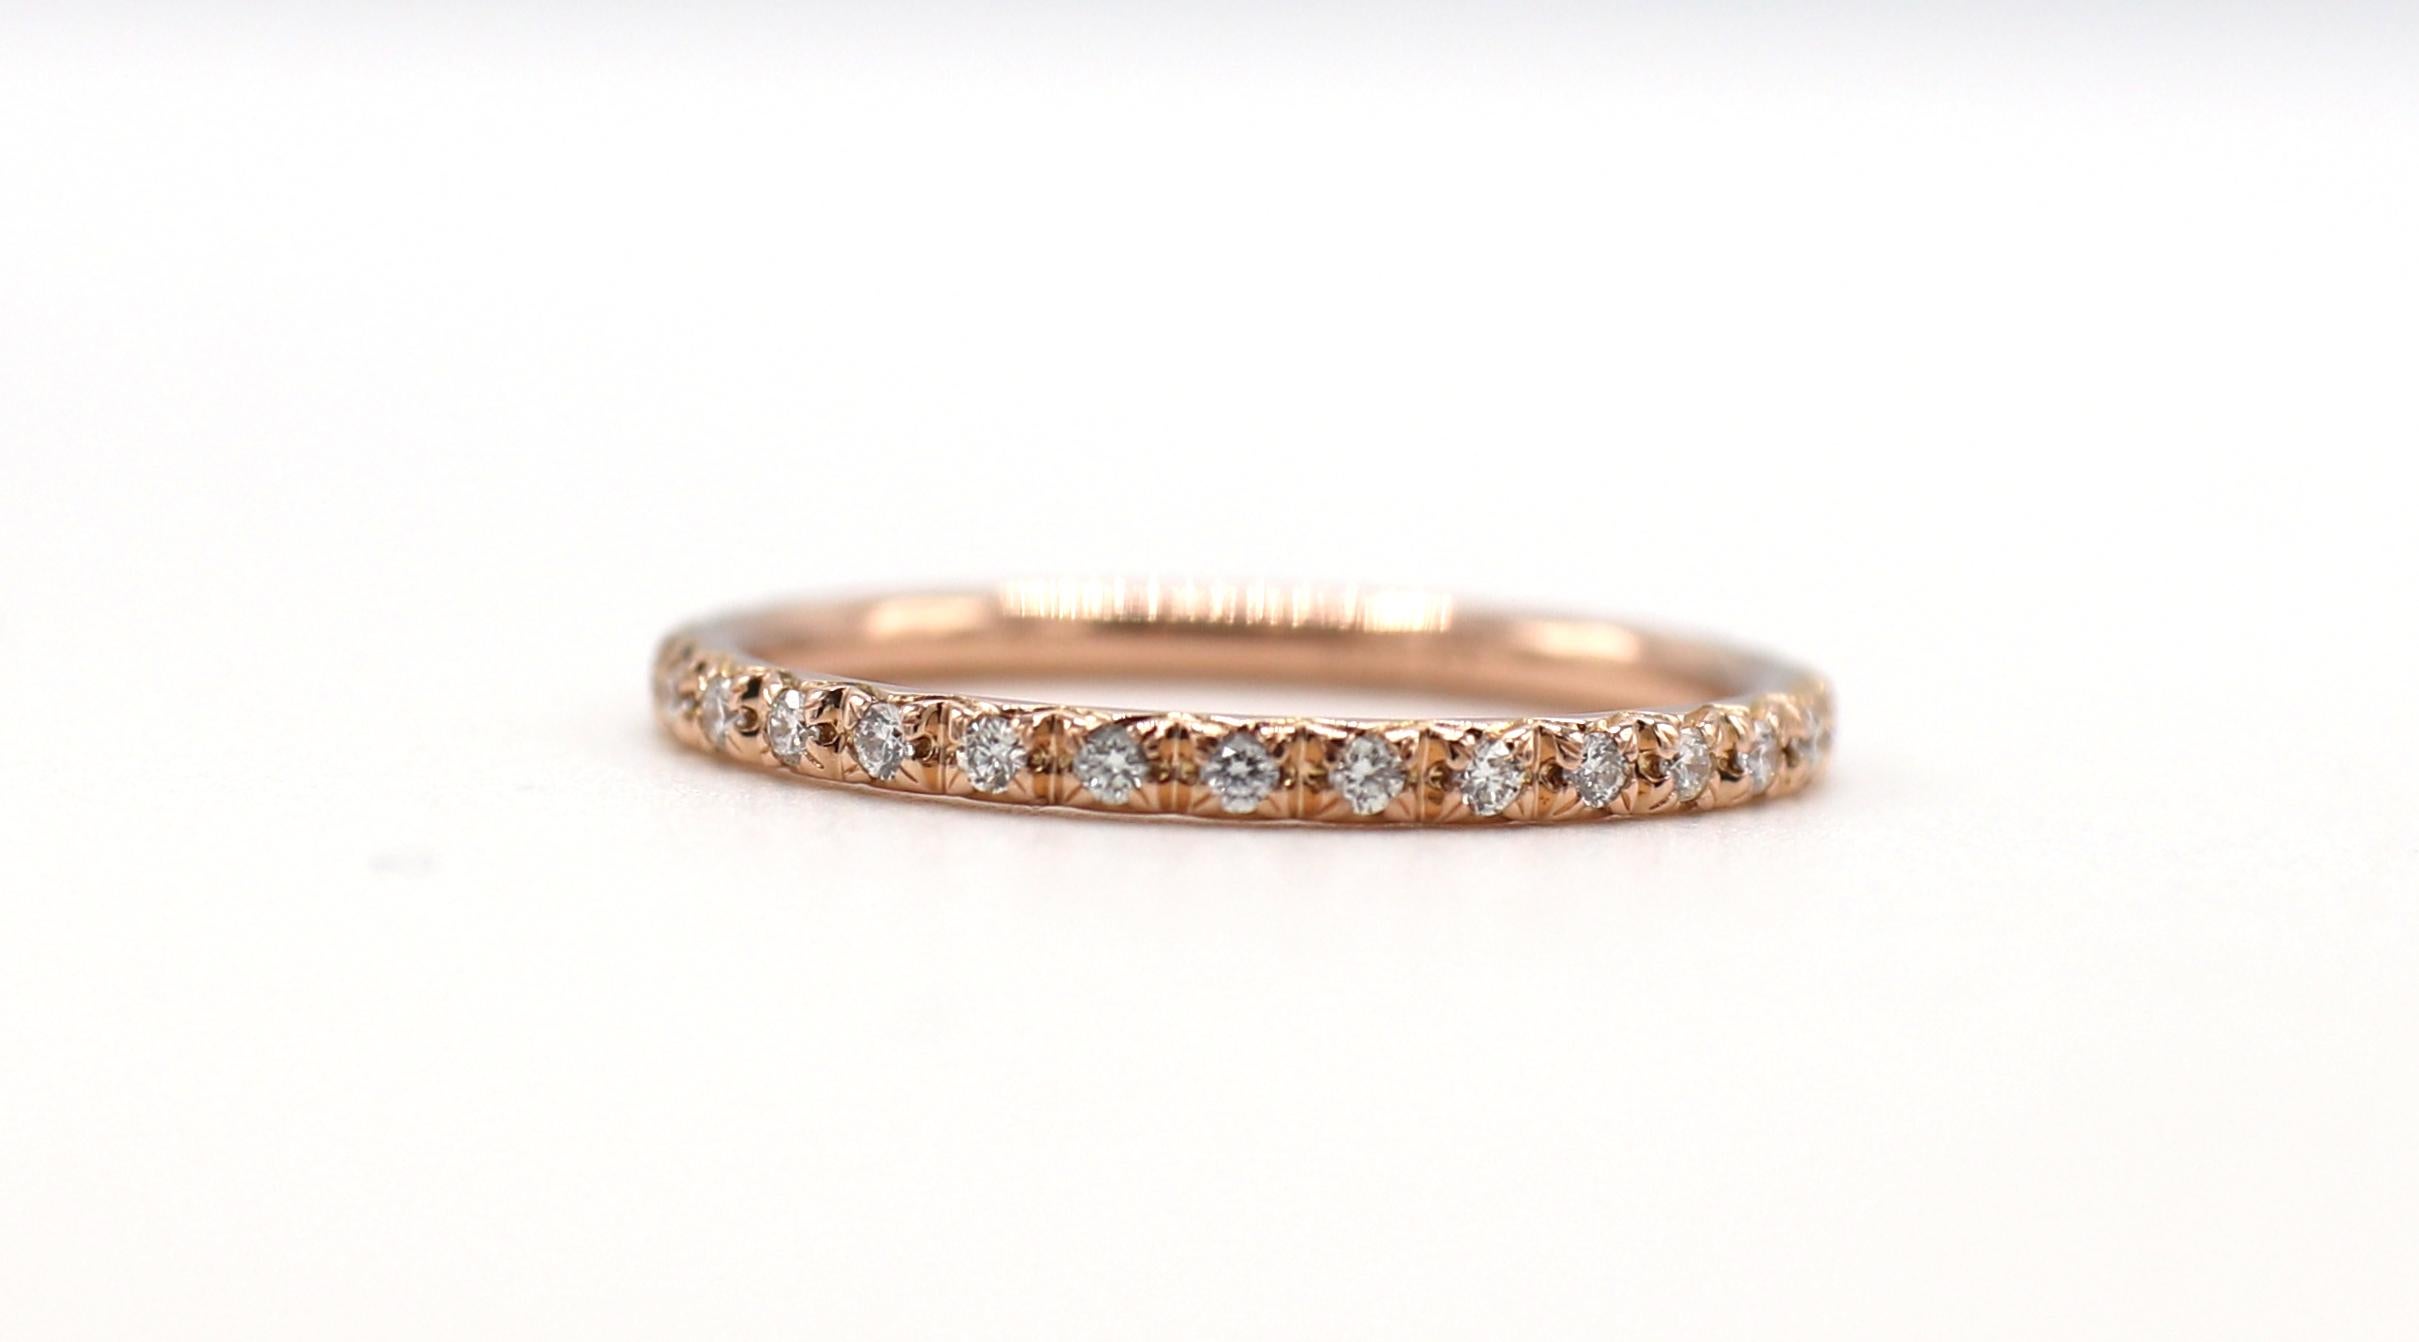 14 Karat Rose Gold .30 Carat Natural Diamond Eternity Band Ring

Metal: 14k rose gold
Weight: 1.70 grams
Diamonds: Approx. 30 CTW G-H VS round natural diamonds
Size 7.5 (US)
Width: 1.8mm